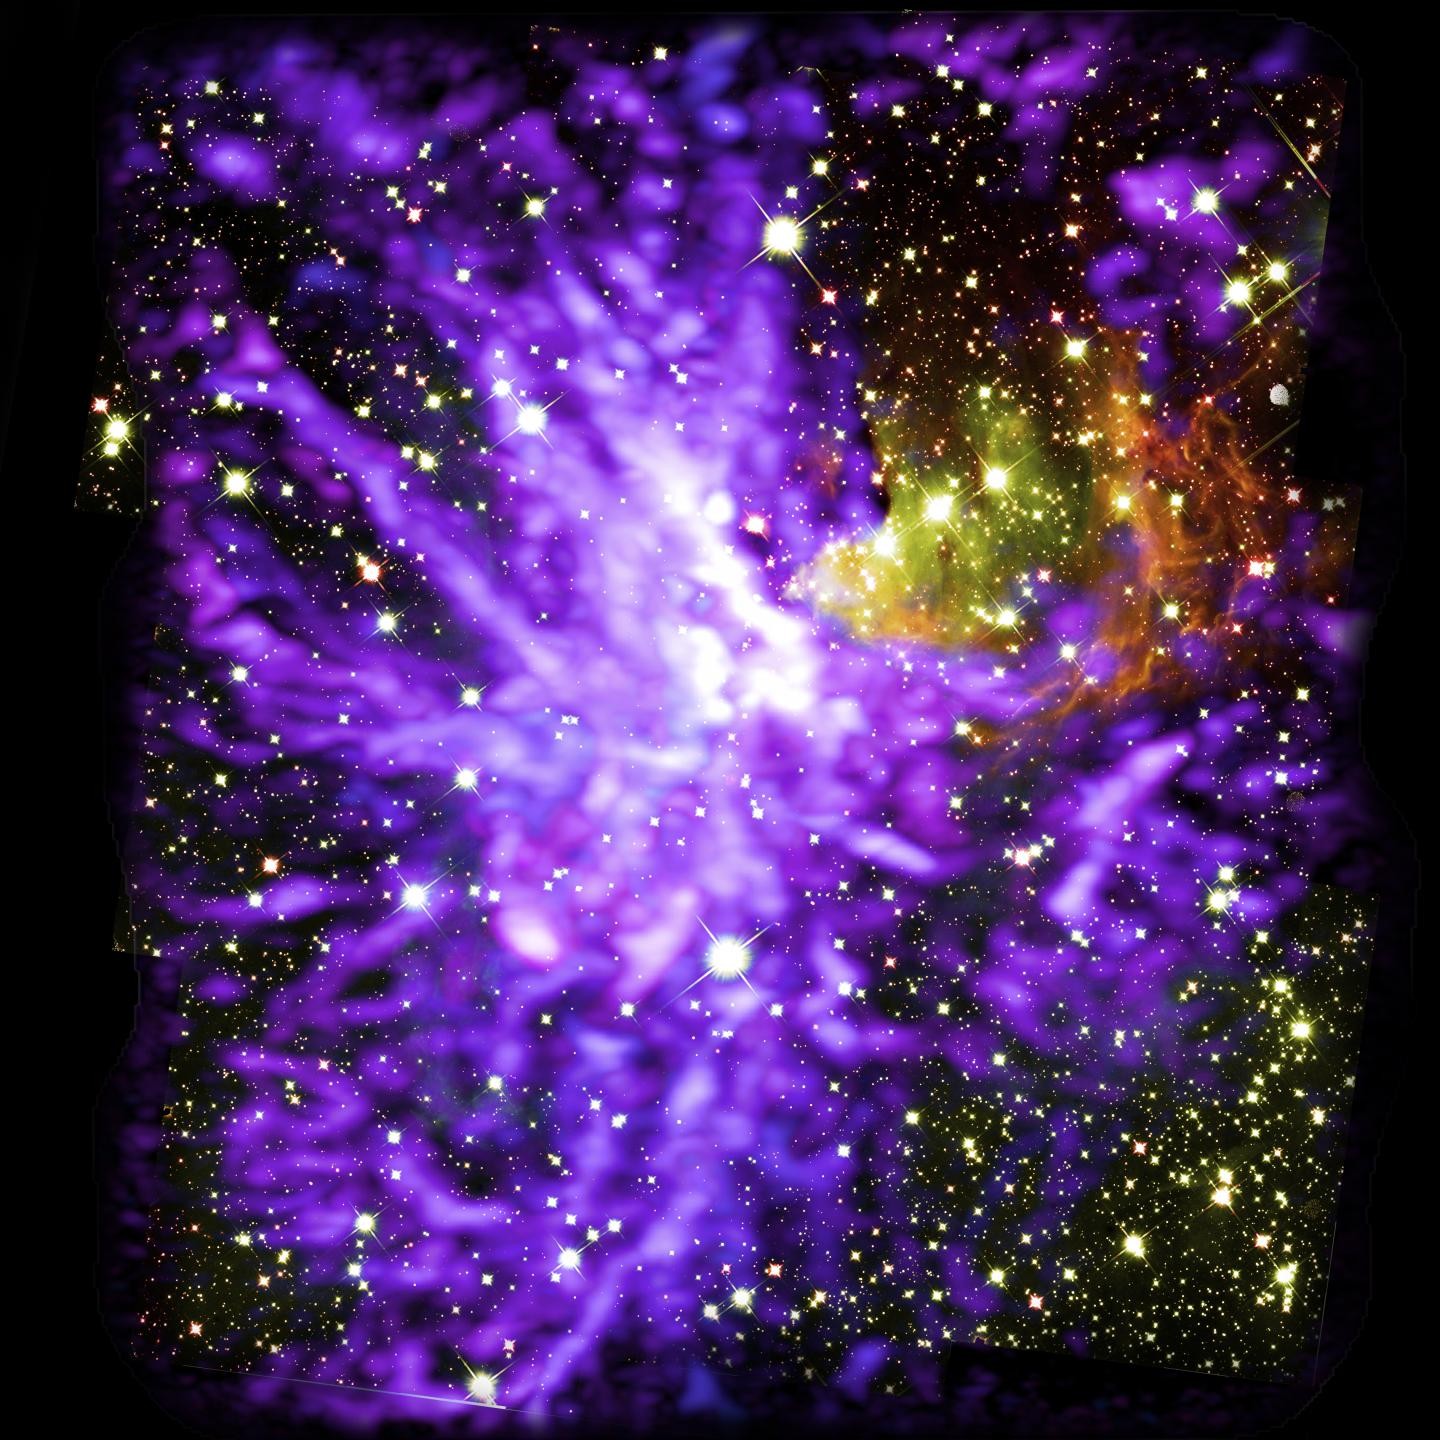 Aglomerado de estrelas G286.21+0.17 no momento de sua formação (Foto: ALMA (ESO/NAOJ/NRAO), Y. Cheng et al.; NRAO/AUI/NSF, S. Dagnello; NASA/ESA Hubble)